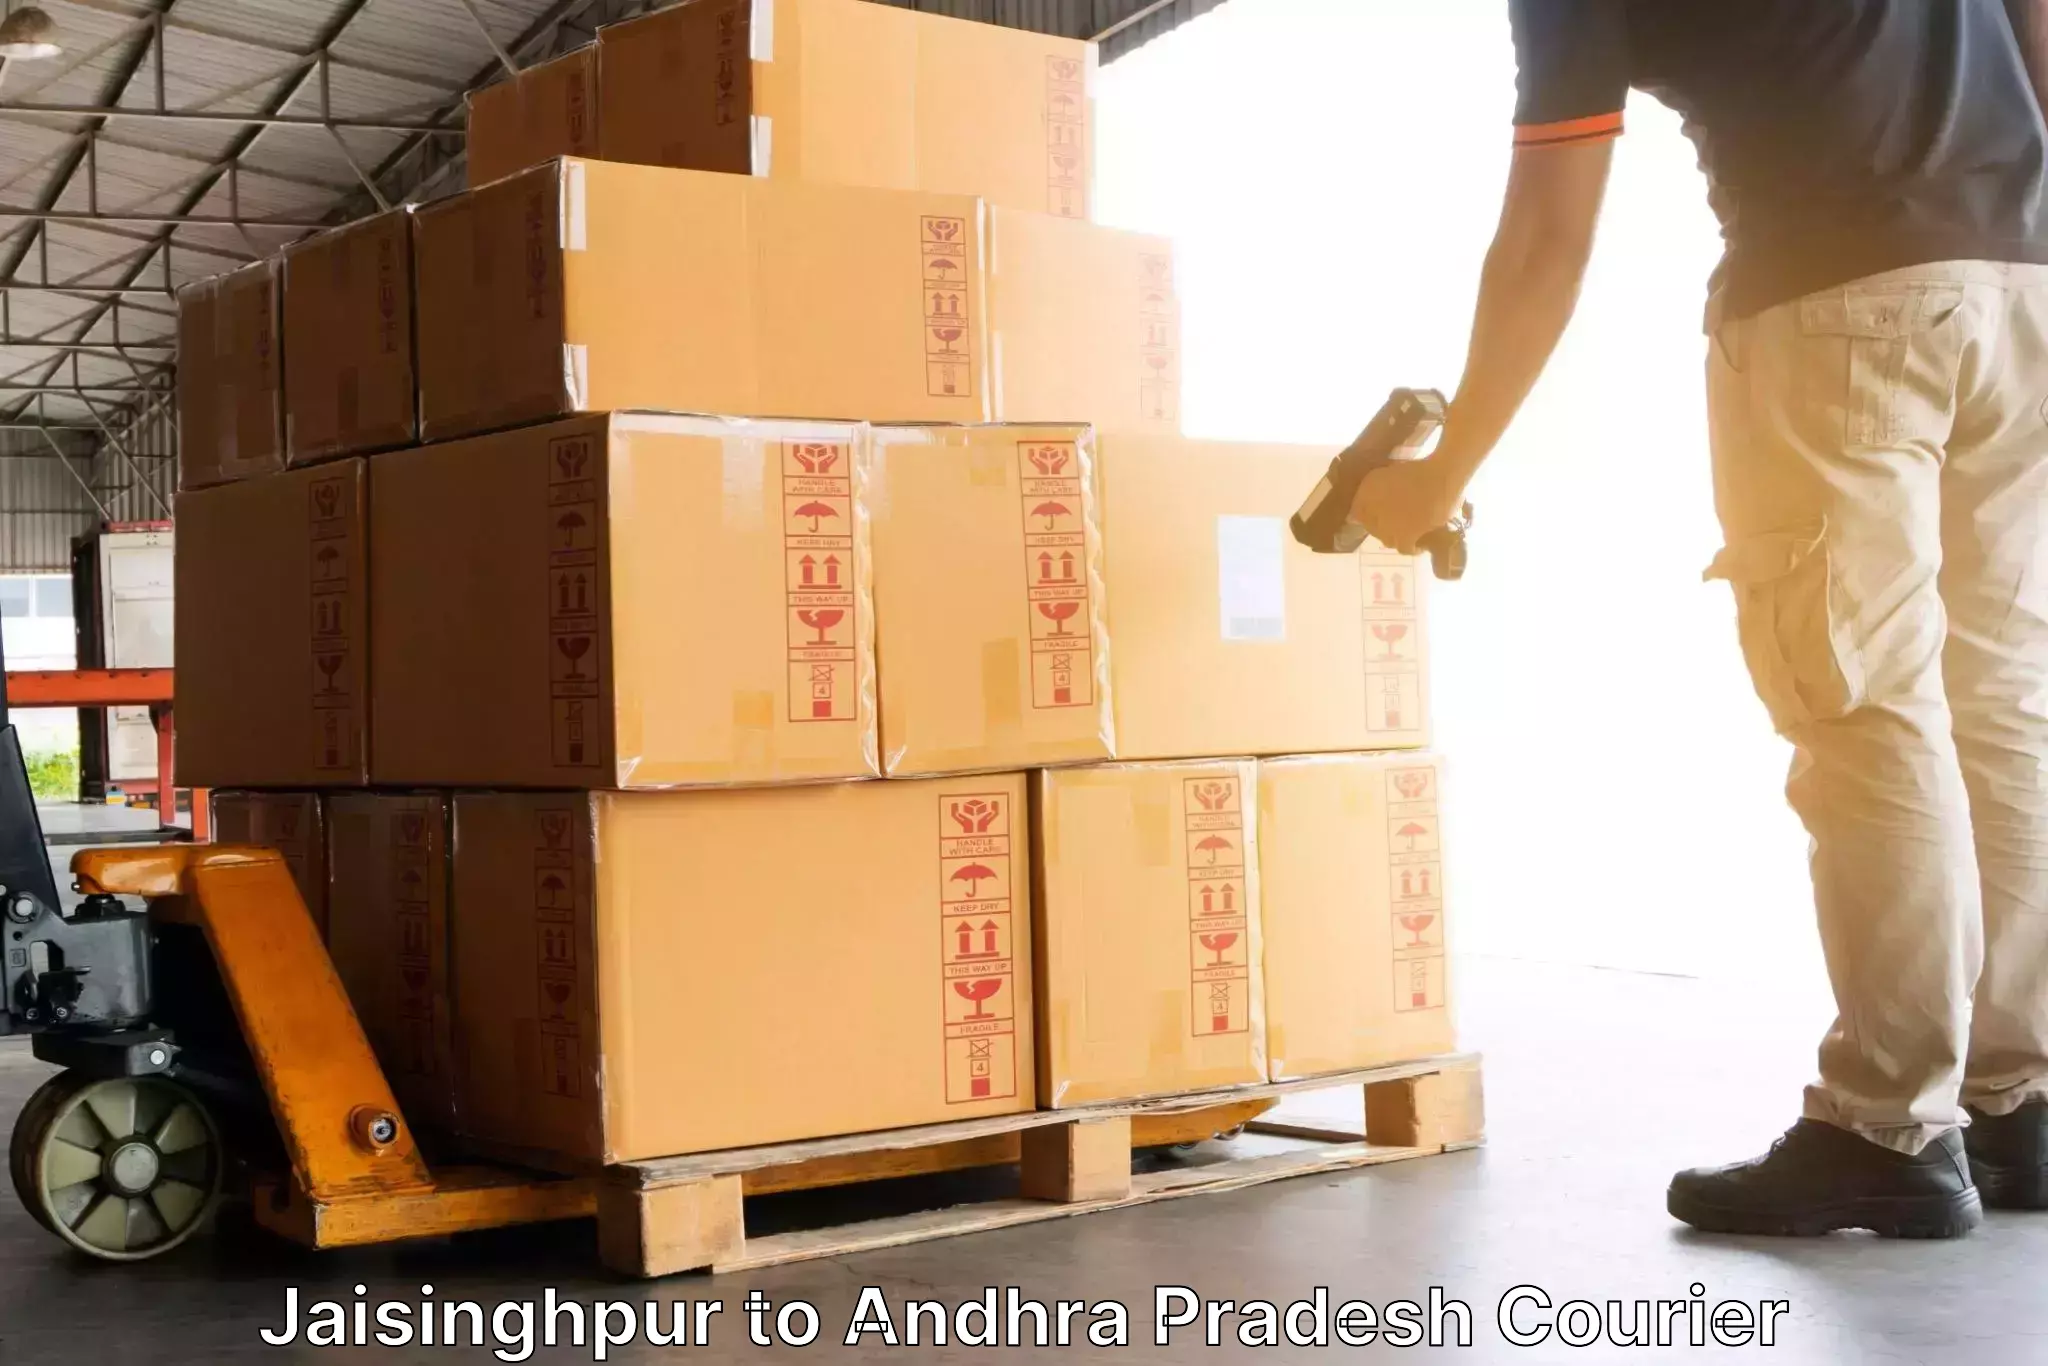 Logistics service provider Jaisinghpur to Chagallu